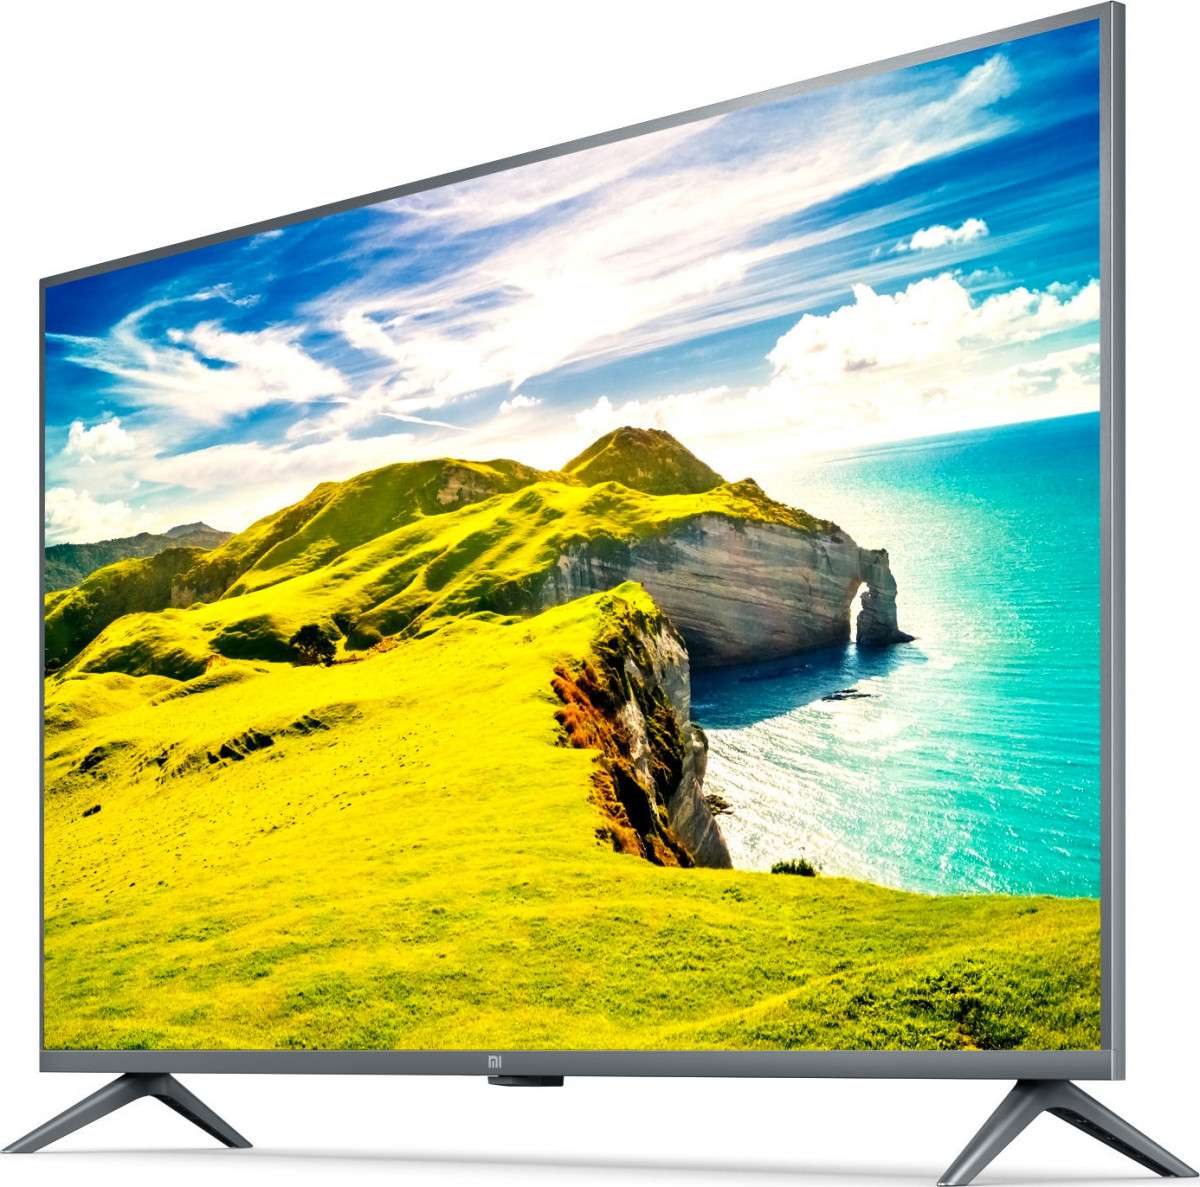 Телевизор Xiaomi Mi TV 4S 43 T2 Global 42.5 (2019)